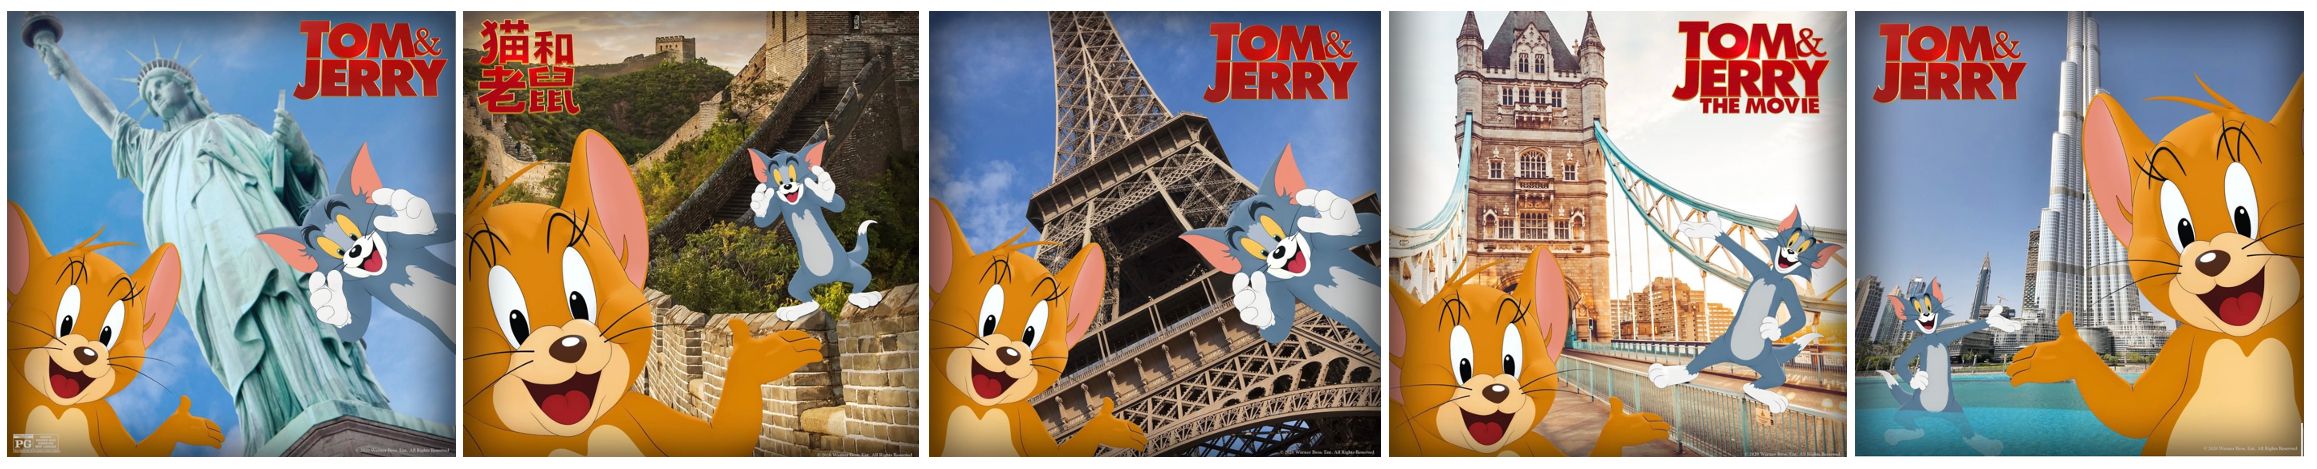 Tom & Jerry The Movie Image #5